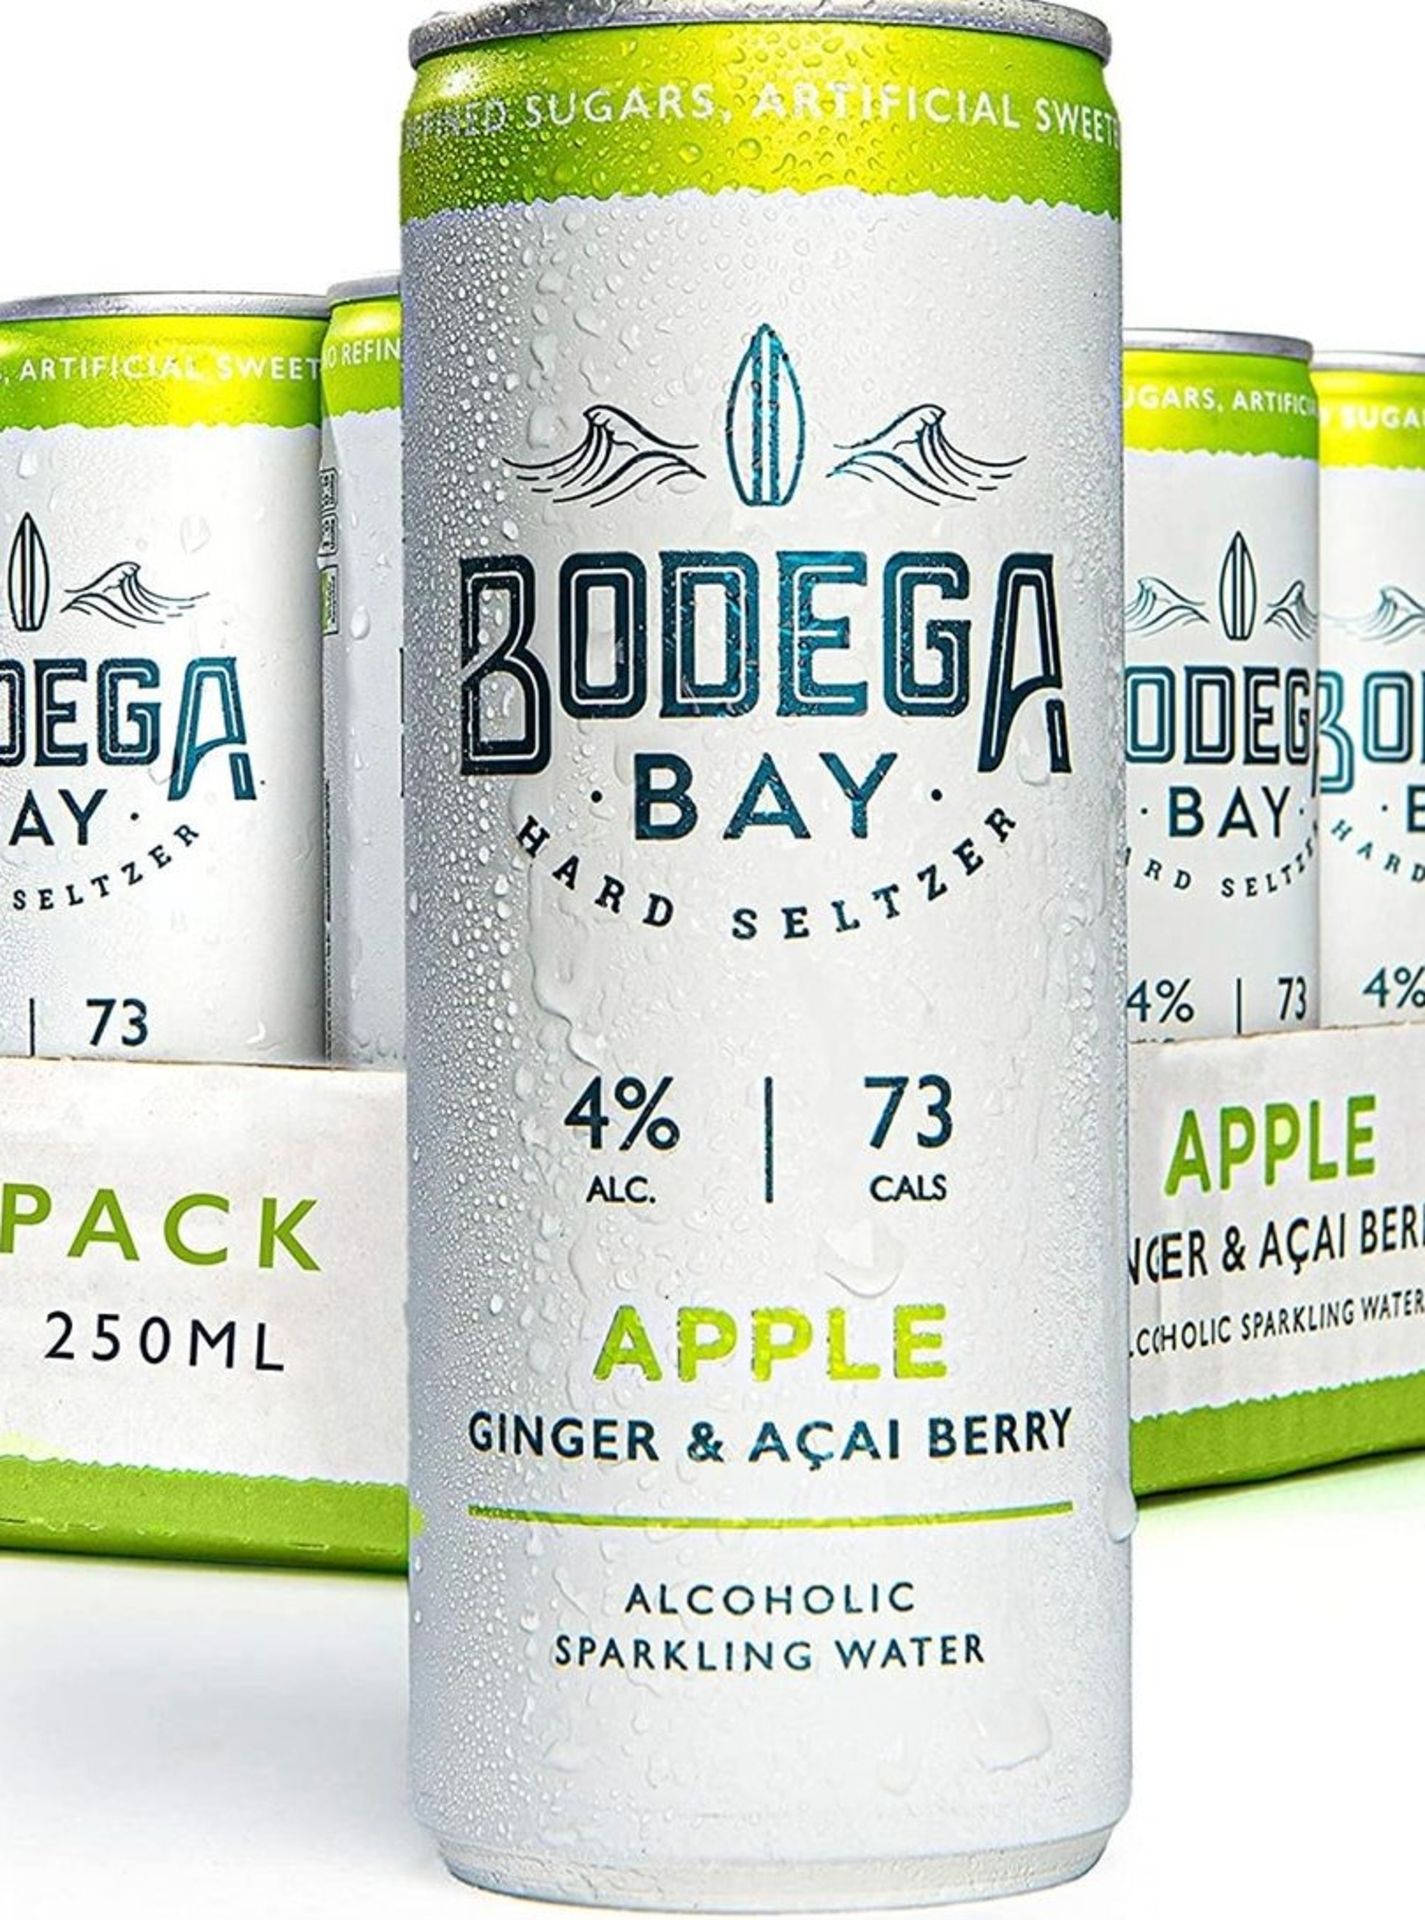 24 x Bodega Bay Hard Seltzer 250ml Alcoholic Sparkling Water Drinks - Apple Ginger & Acai Berry - 4% - Image 2 of 10